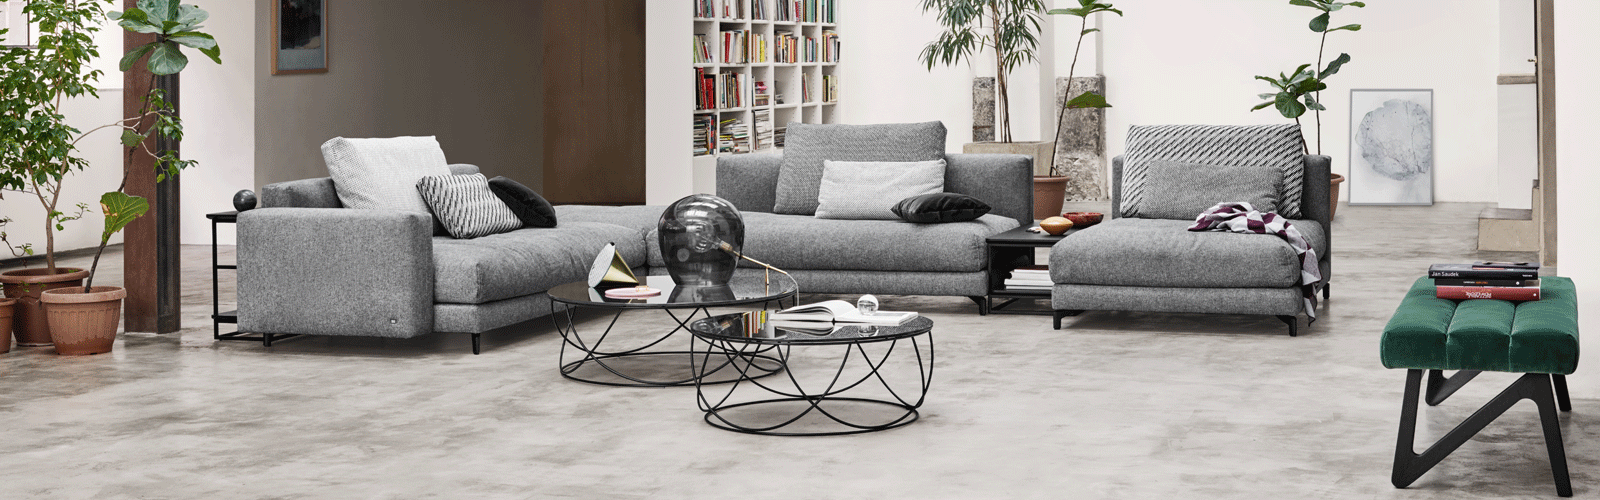 Rolf Benz Luxurious Lounge Furniture